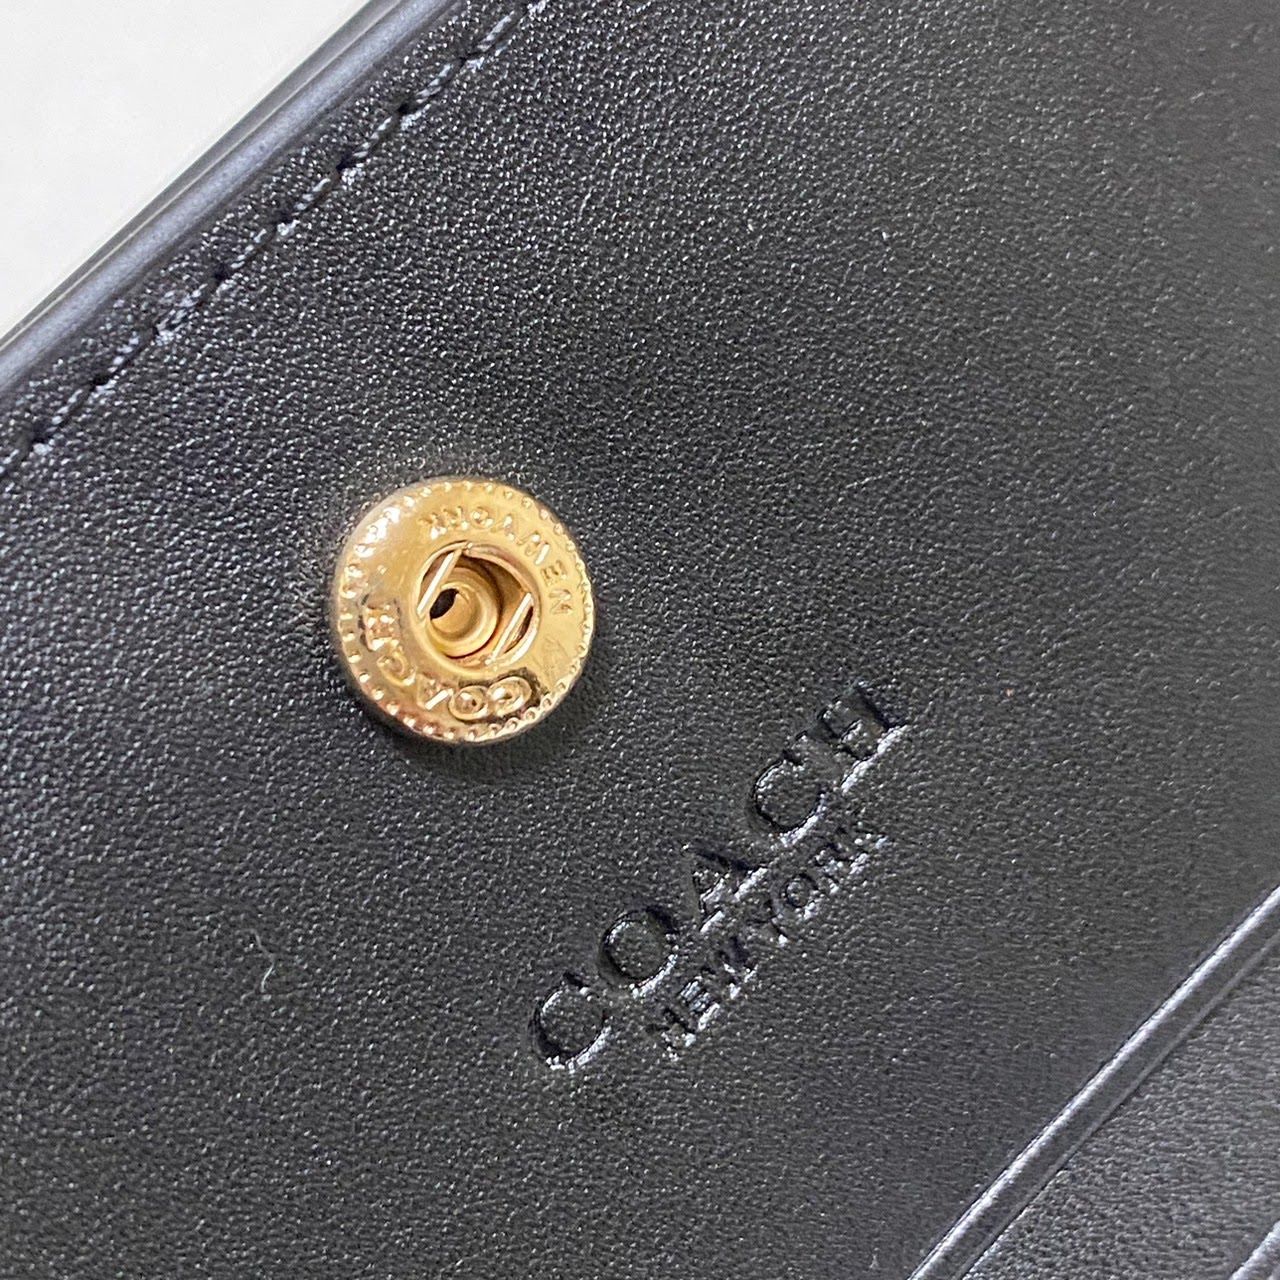 COACH 二つ折り財布 エンボス加工 スモールウォレット ブラック C7353